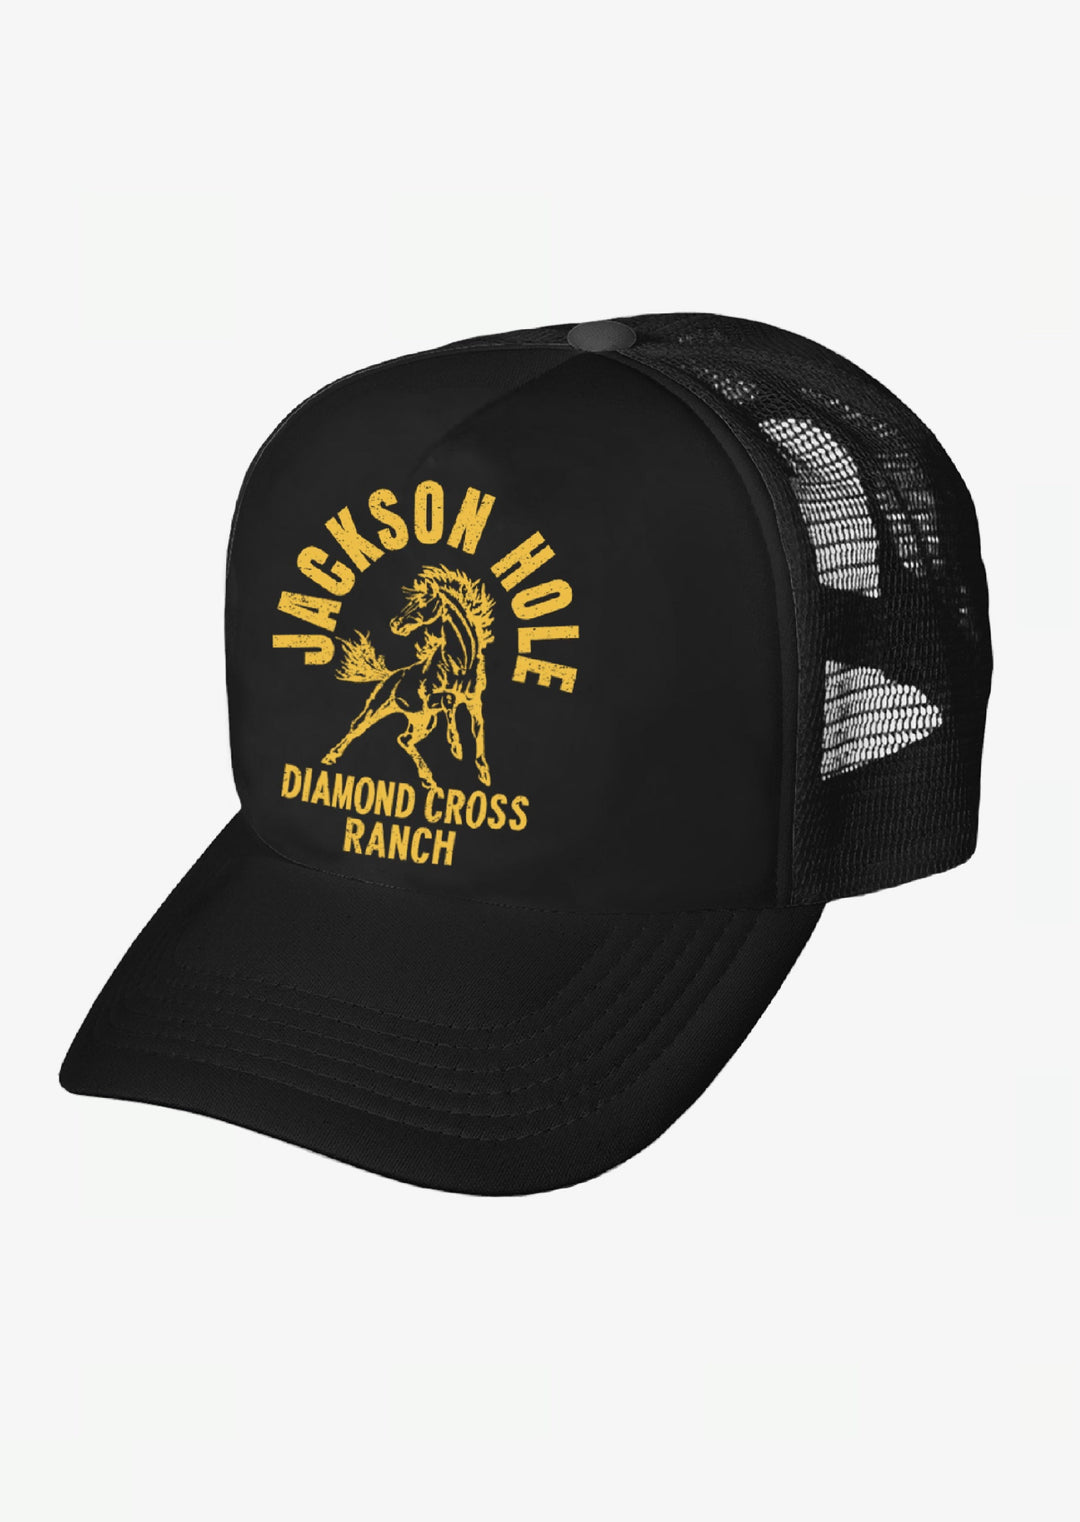 Diamond Cross Ranch Rodeo Charger Black Trucker Cap